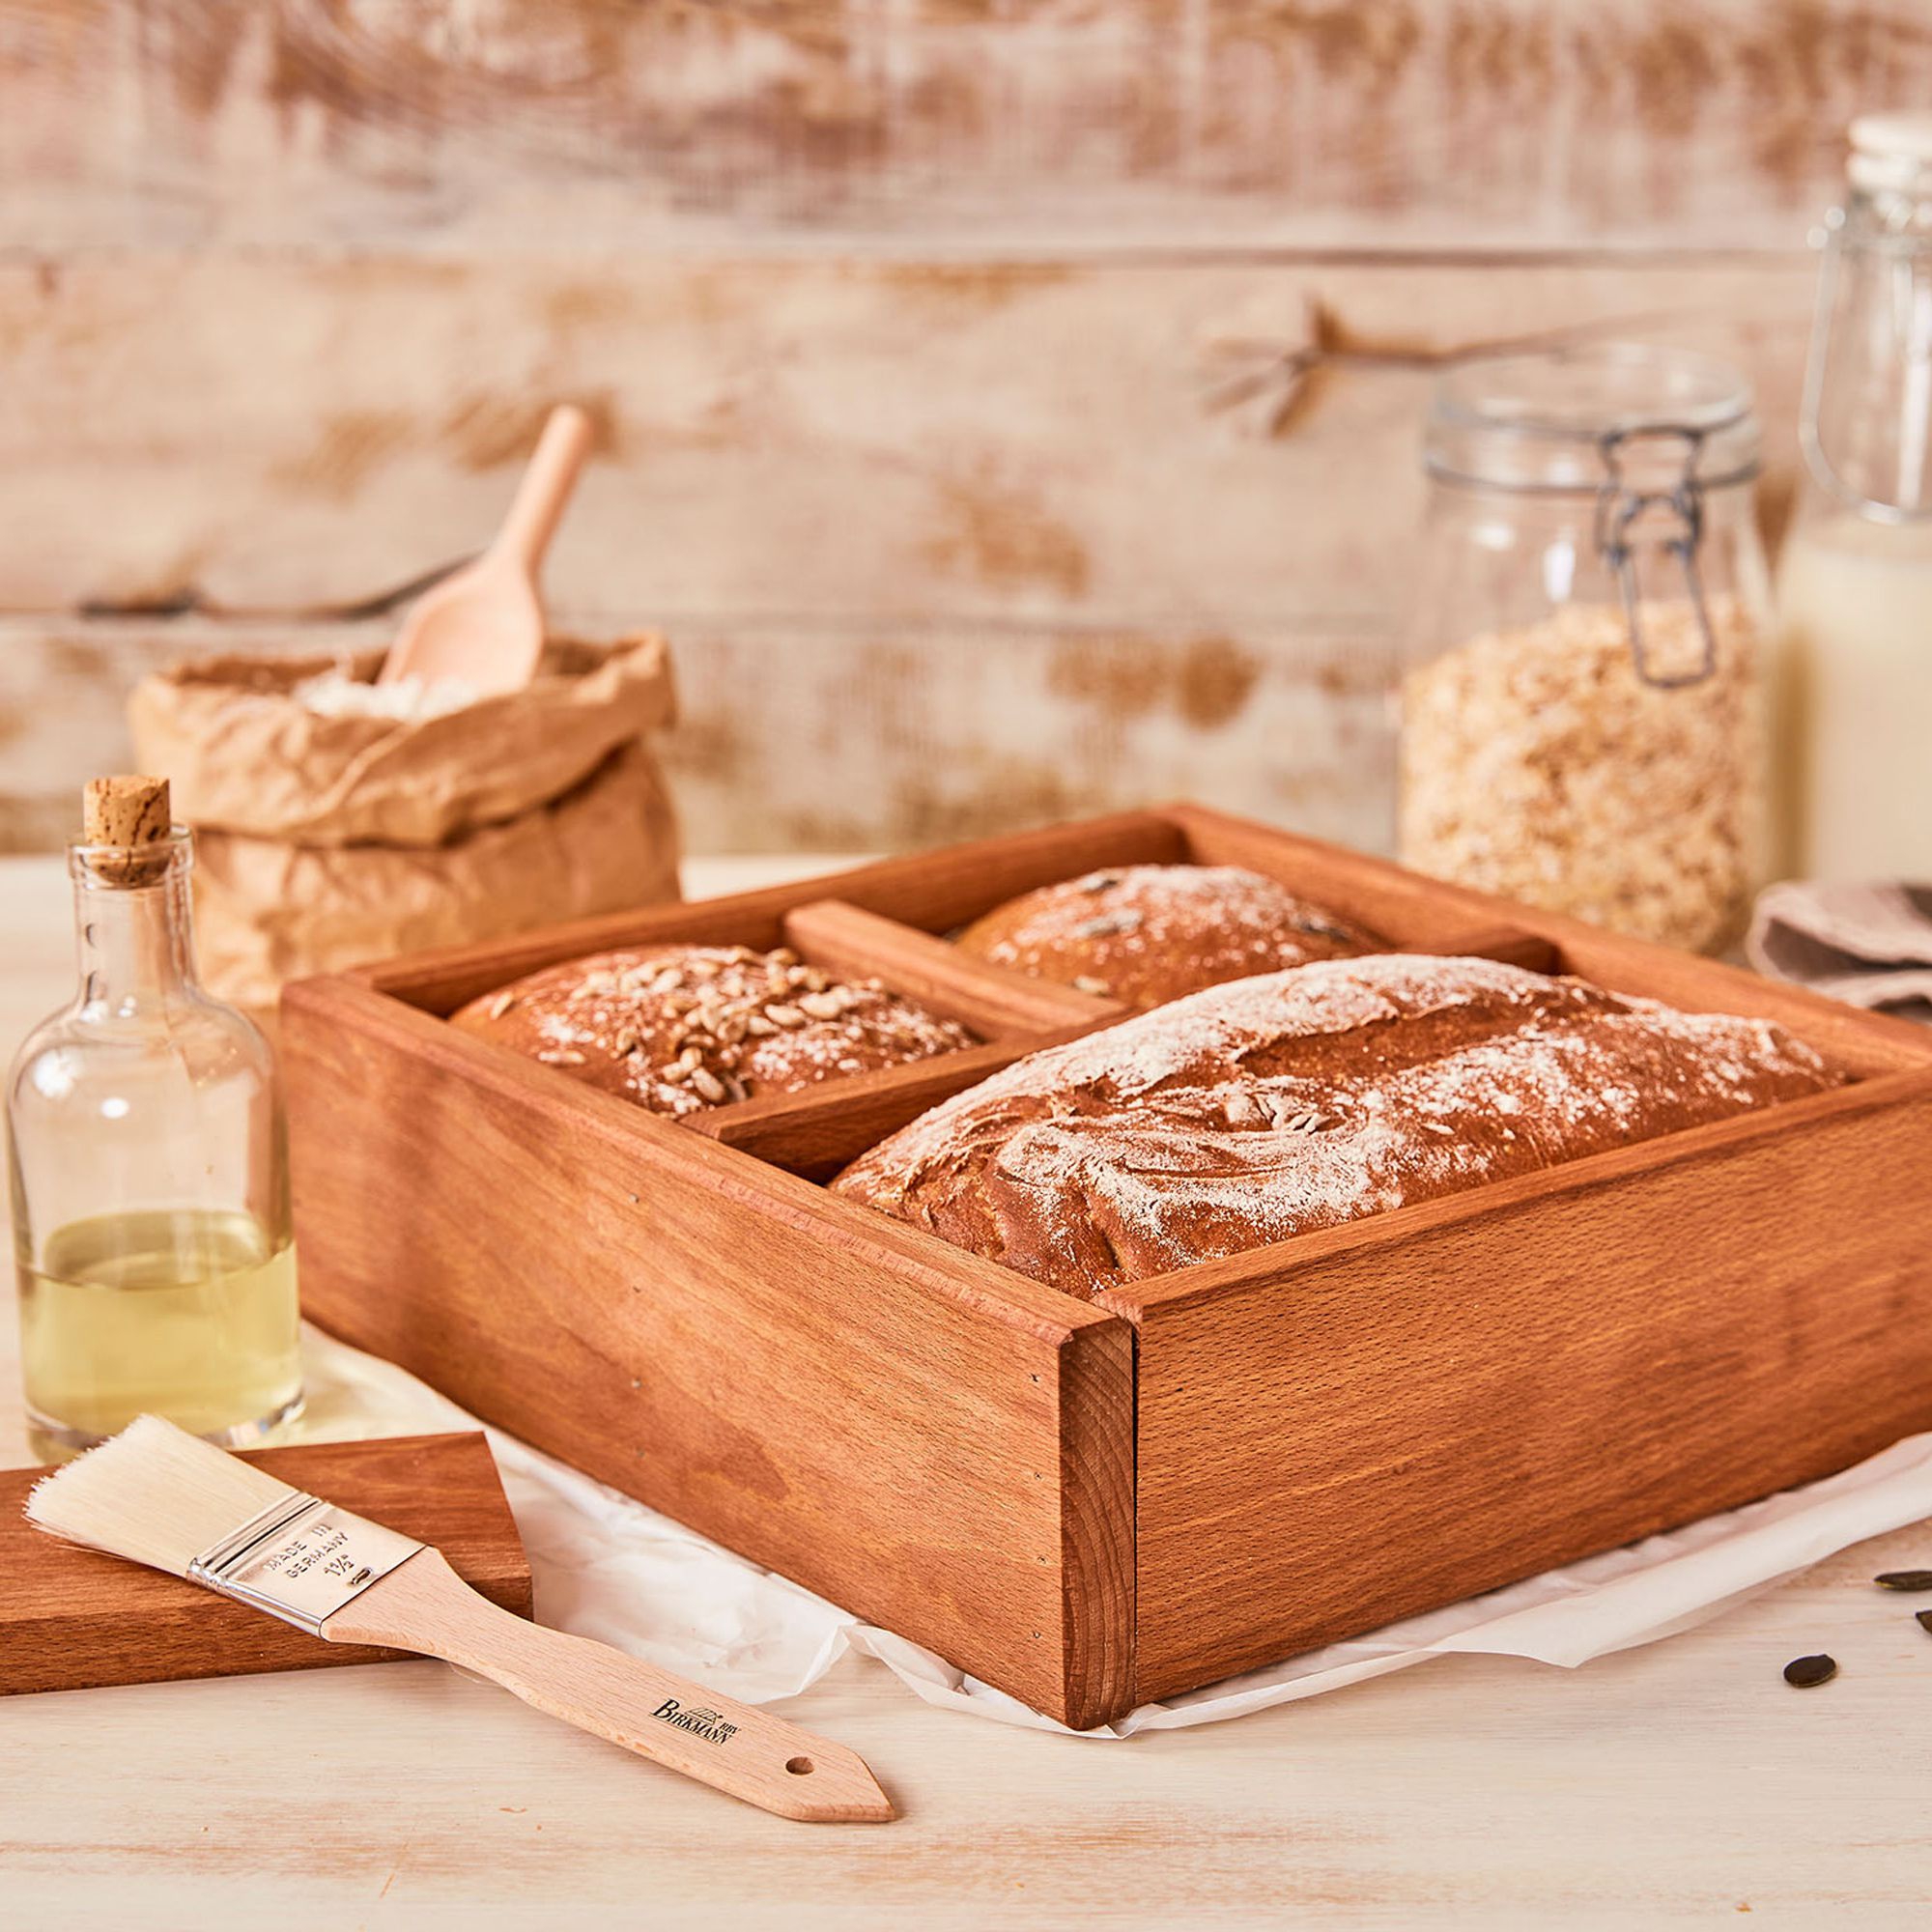 RBV Birkmann -  Laib & Seele - Bread baking frame made of wood